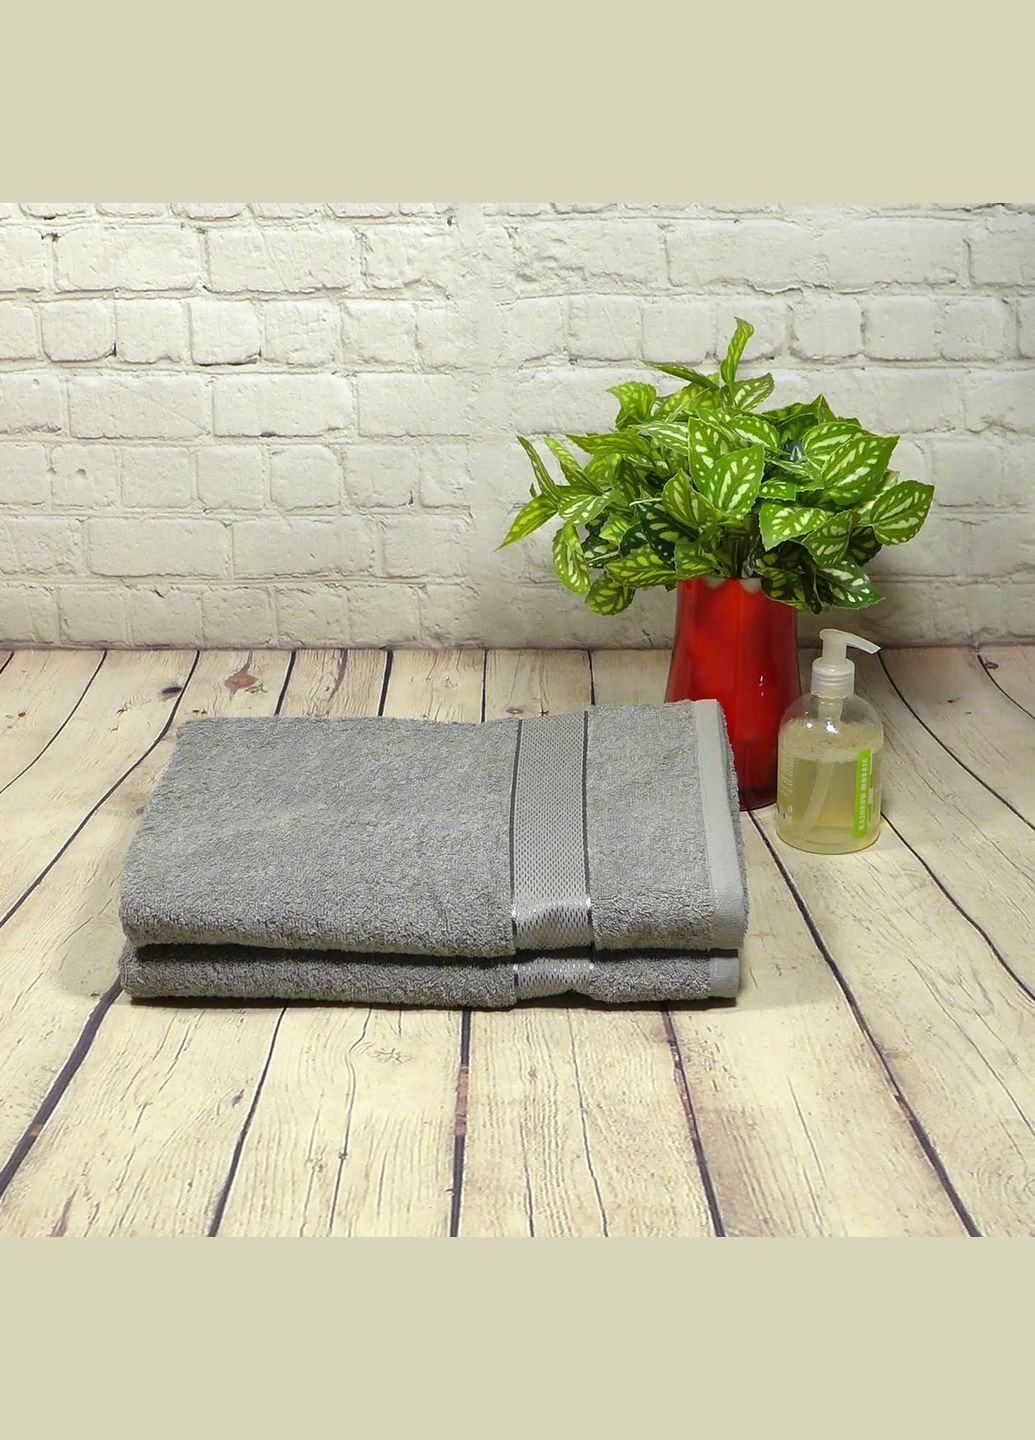 Aisha Home Textile полотенце махровое aisha - royal серый 70*140 (400 г/м2) серый производство -